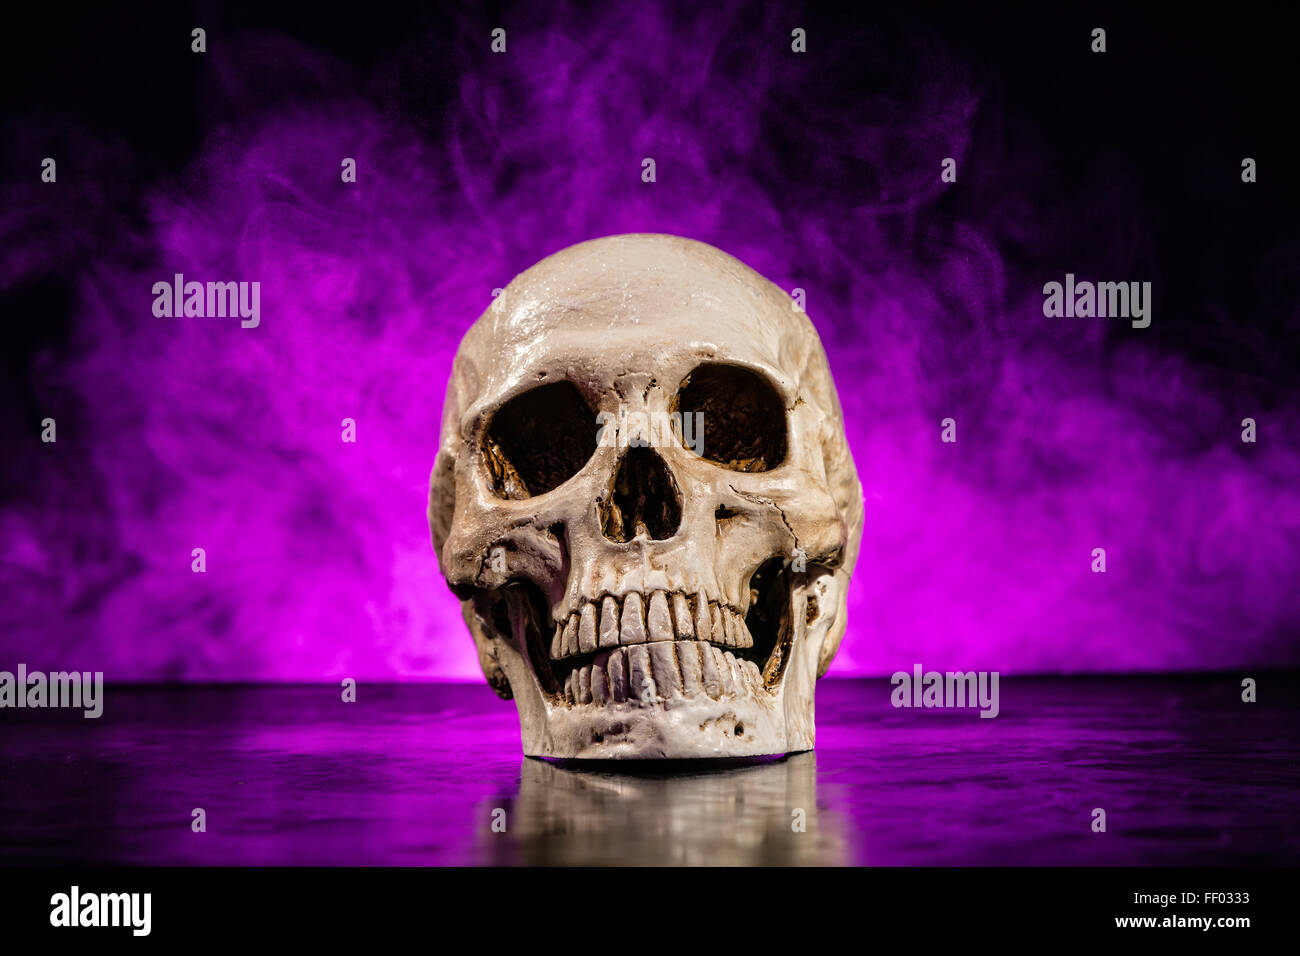 Human skull head with smoke Stock Photo